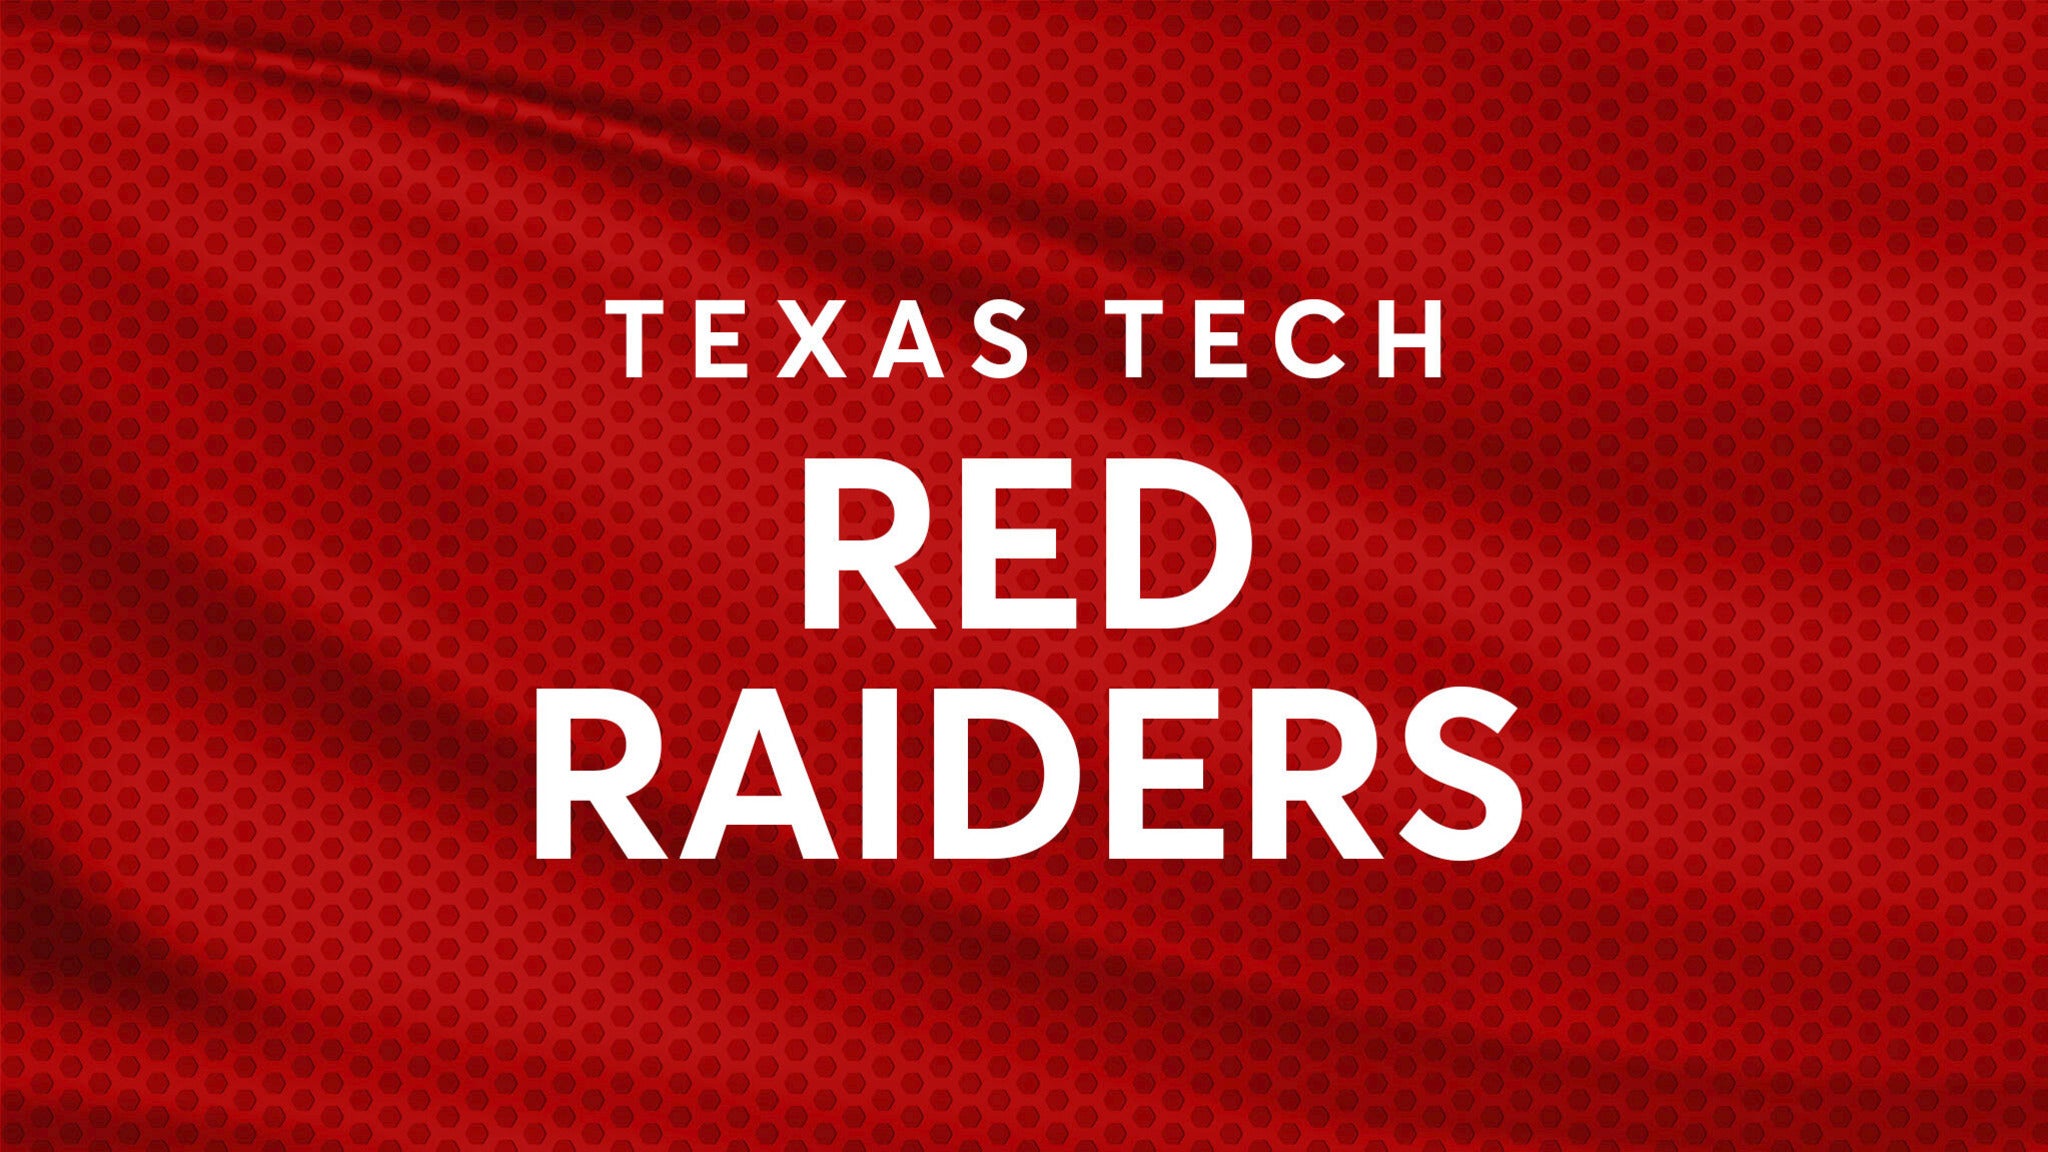 Texas Tech Red Raiders Volleyball presale information on freepresalepasswords.com